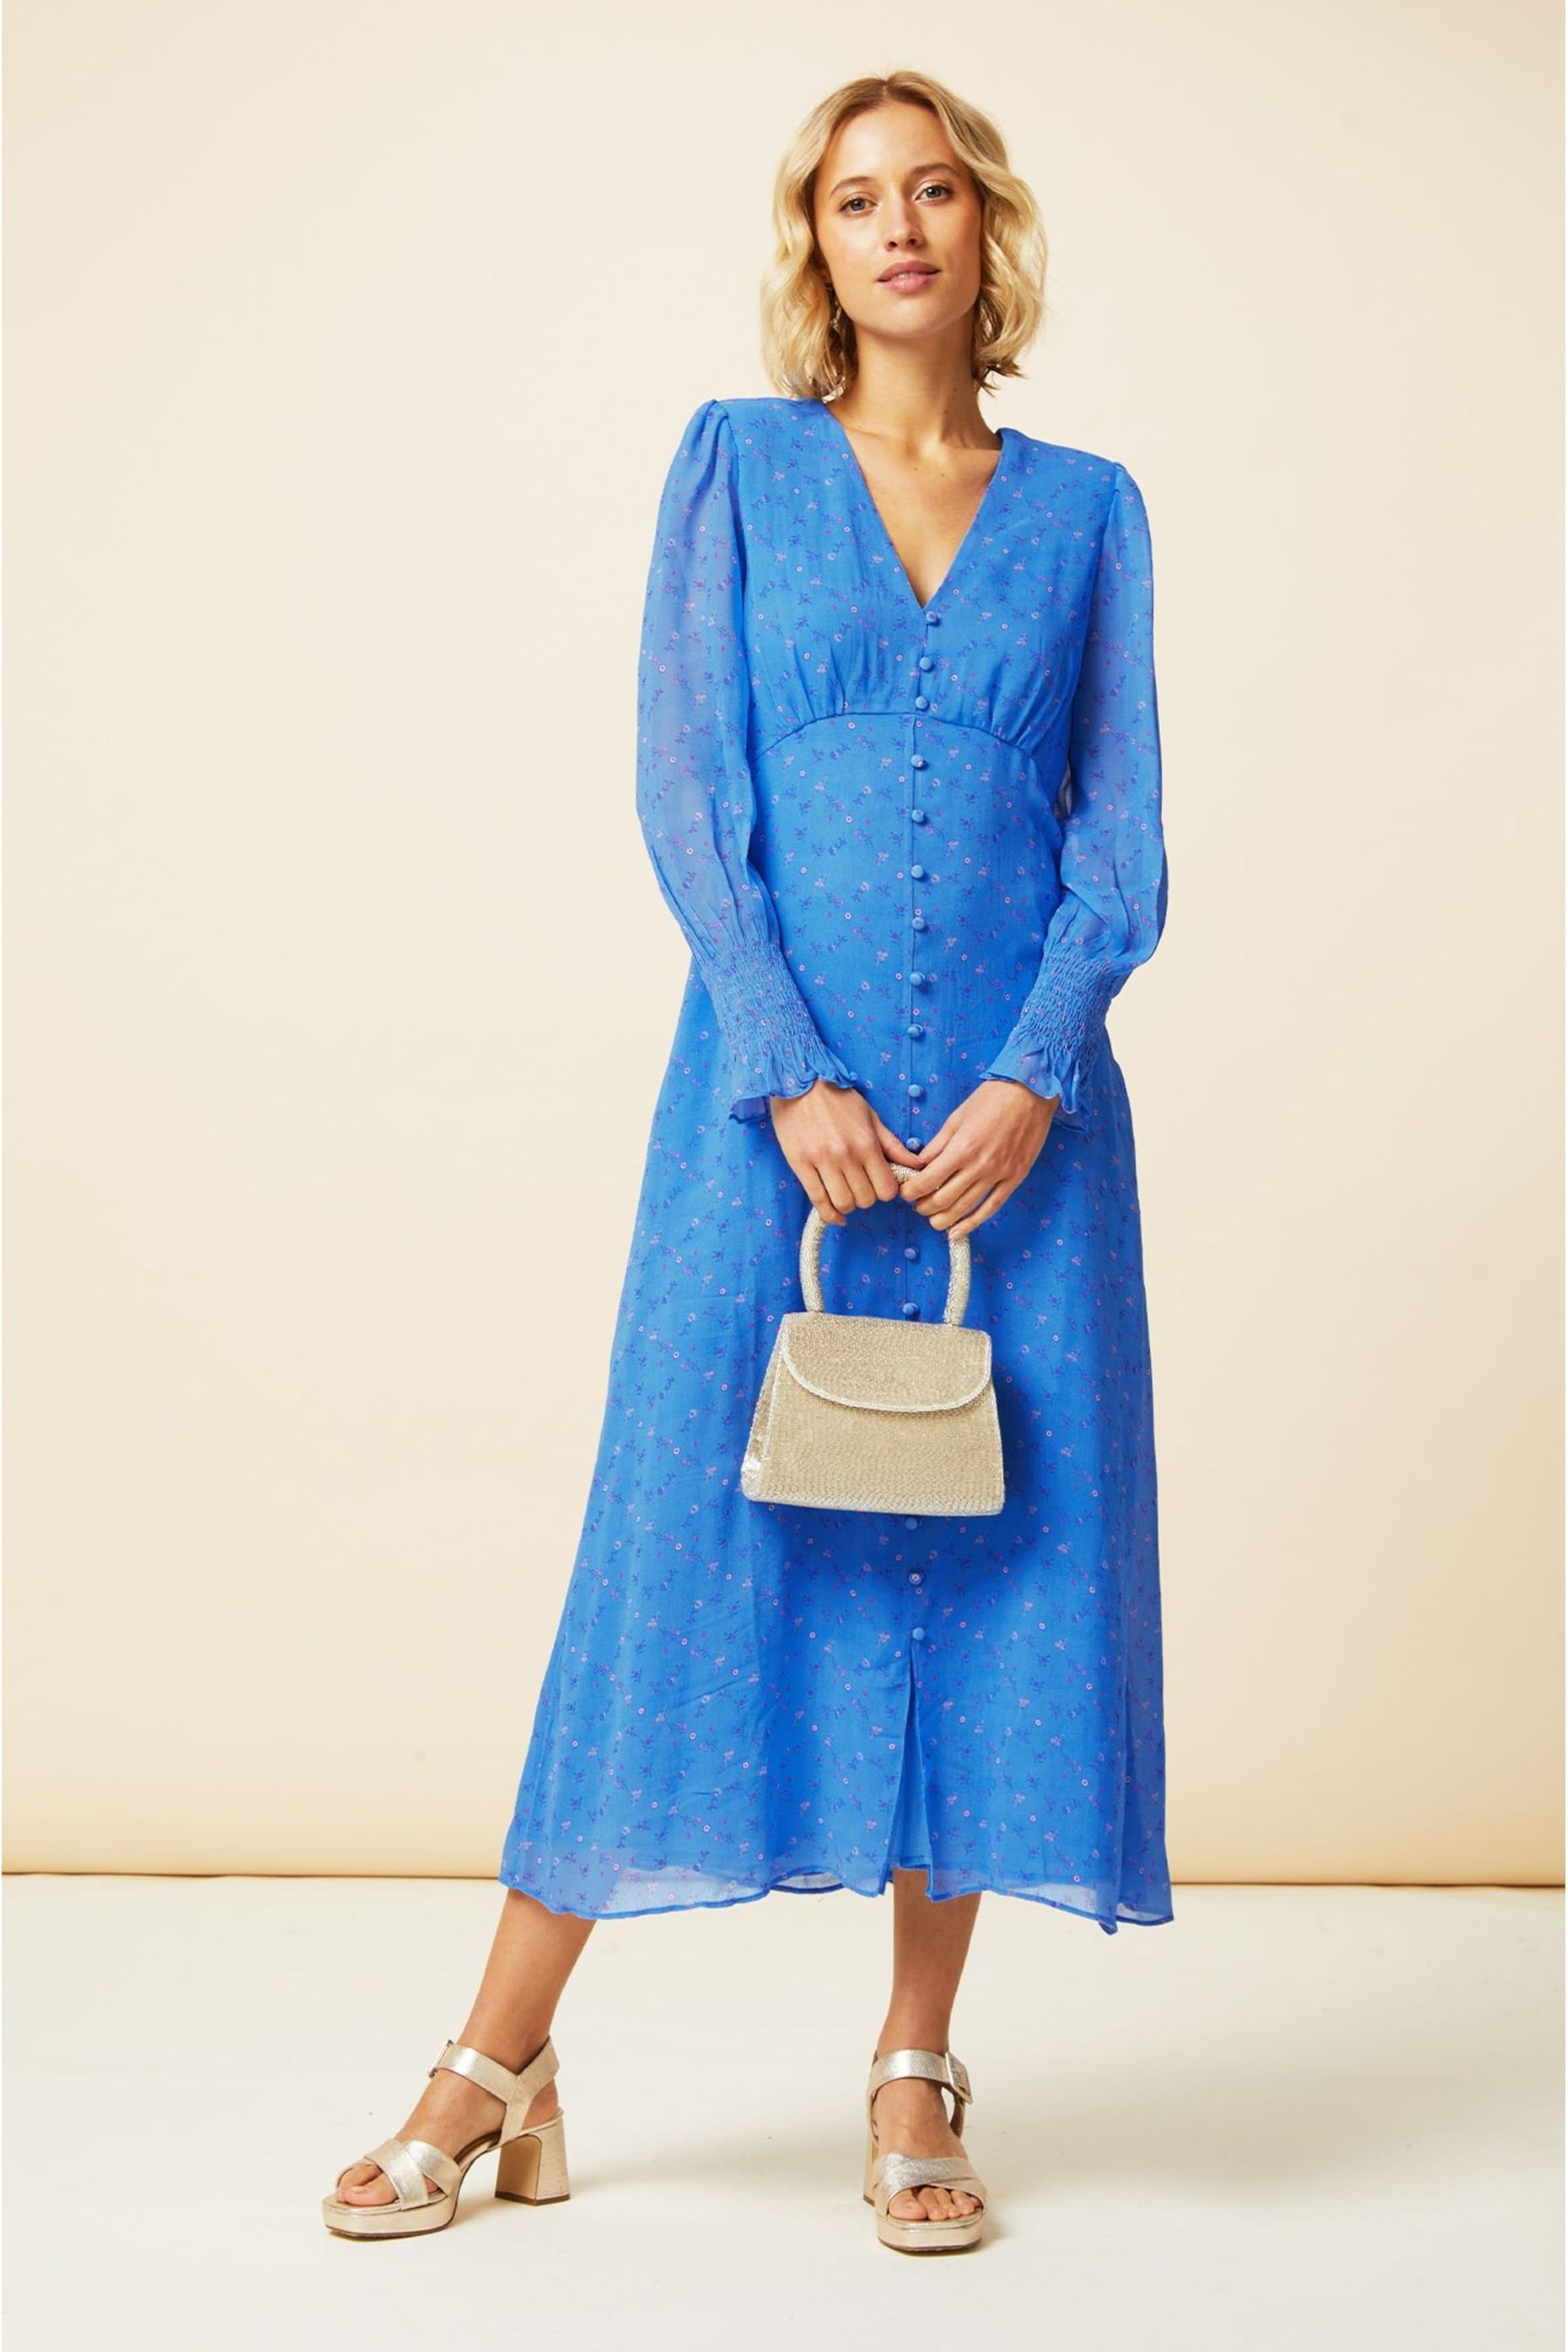 Aspiga Blue Long Sleeve Sally Anne Dress - Image 1 of 4